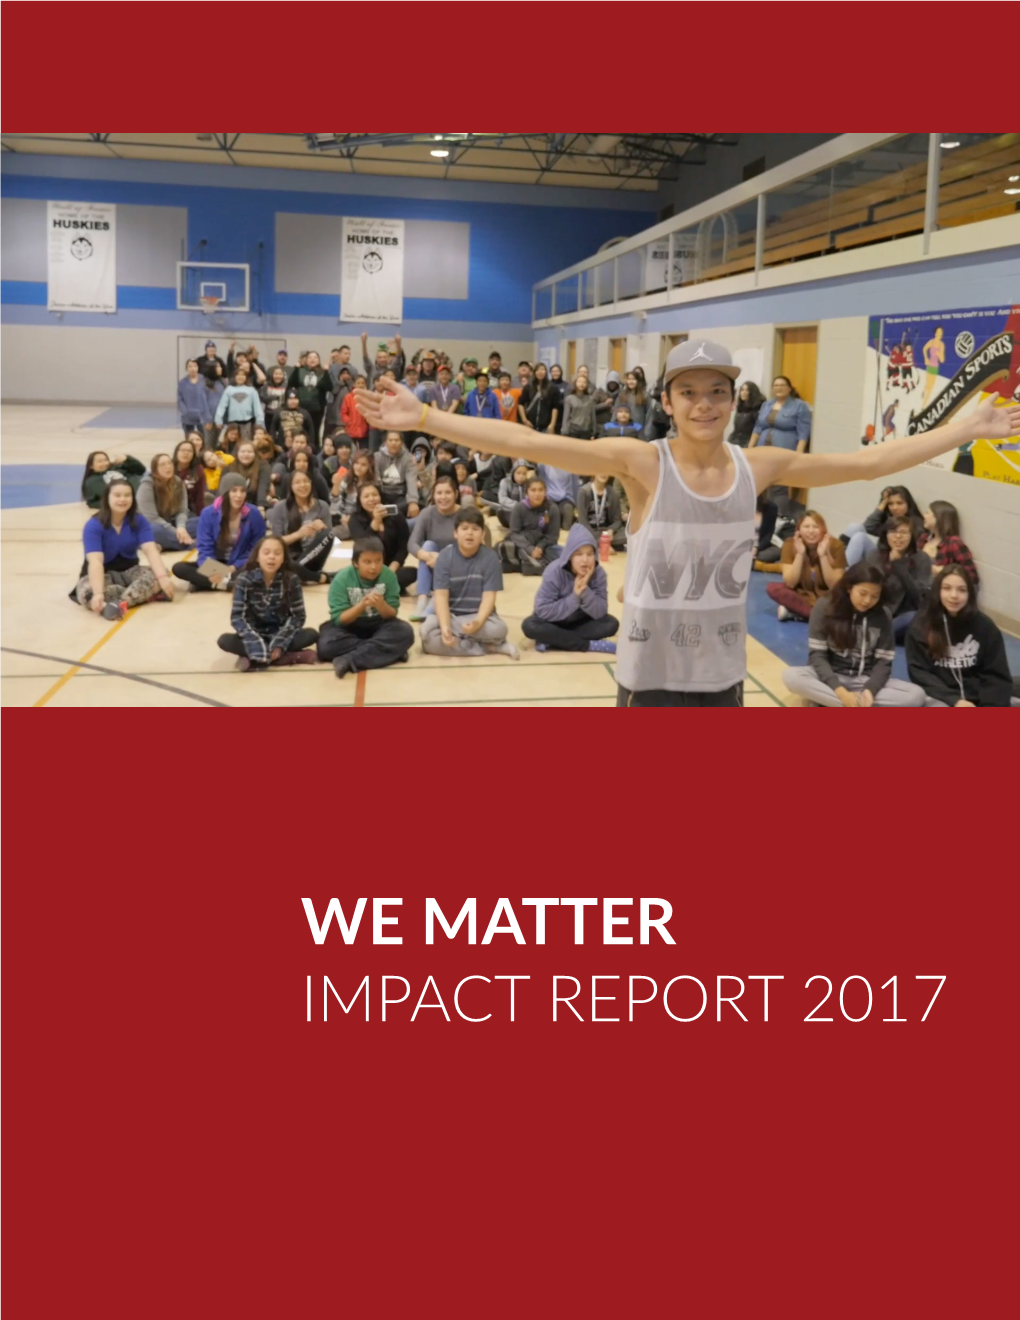 We Matter Impact Report 2017